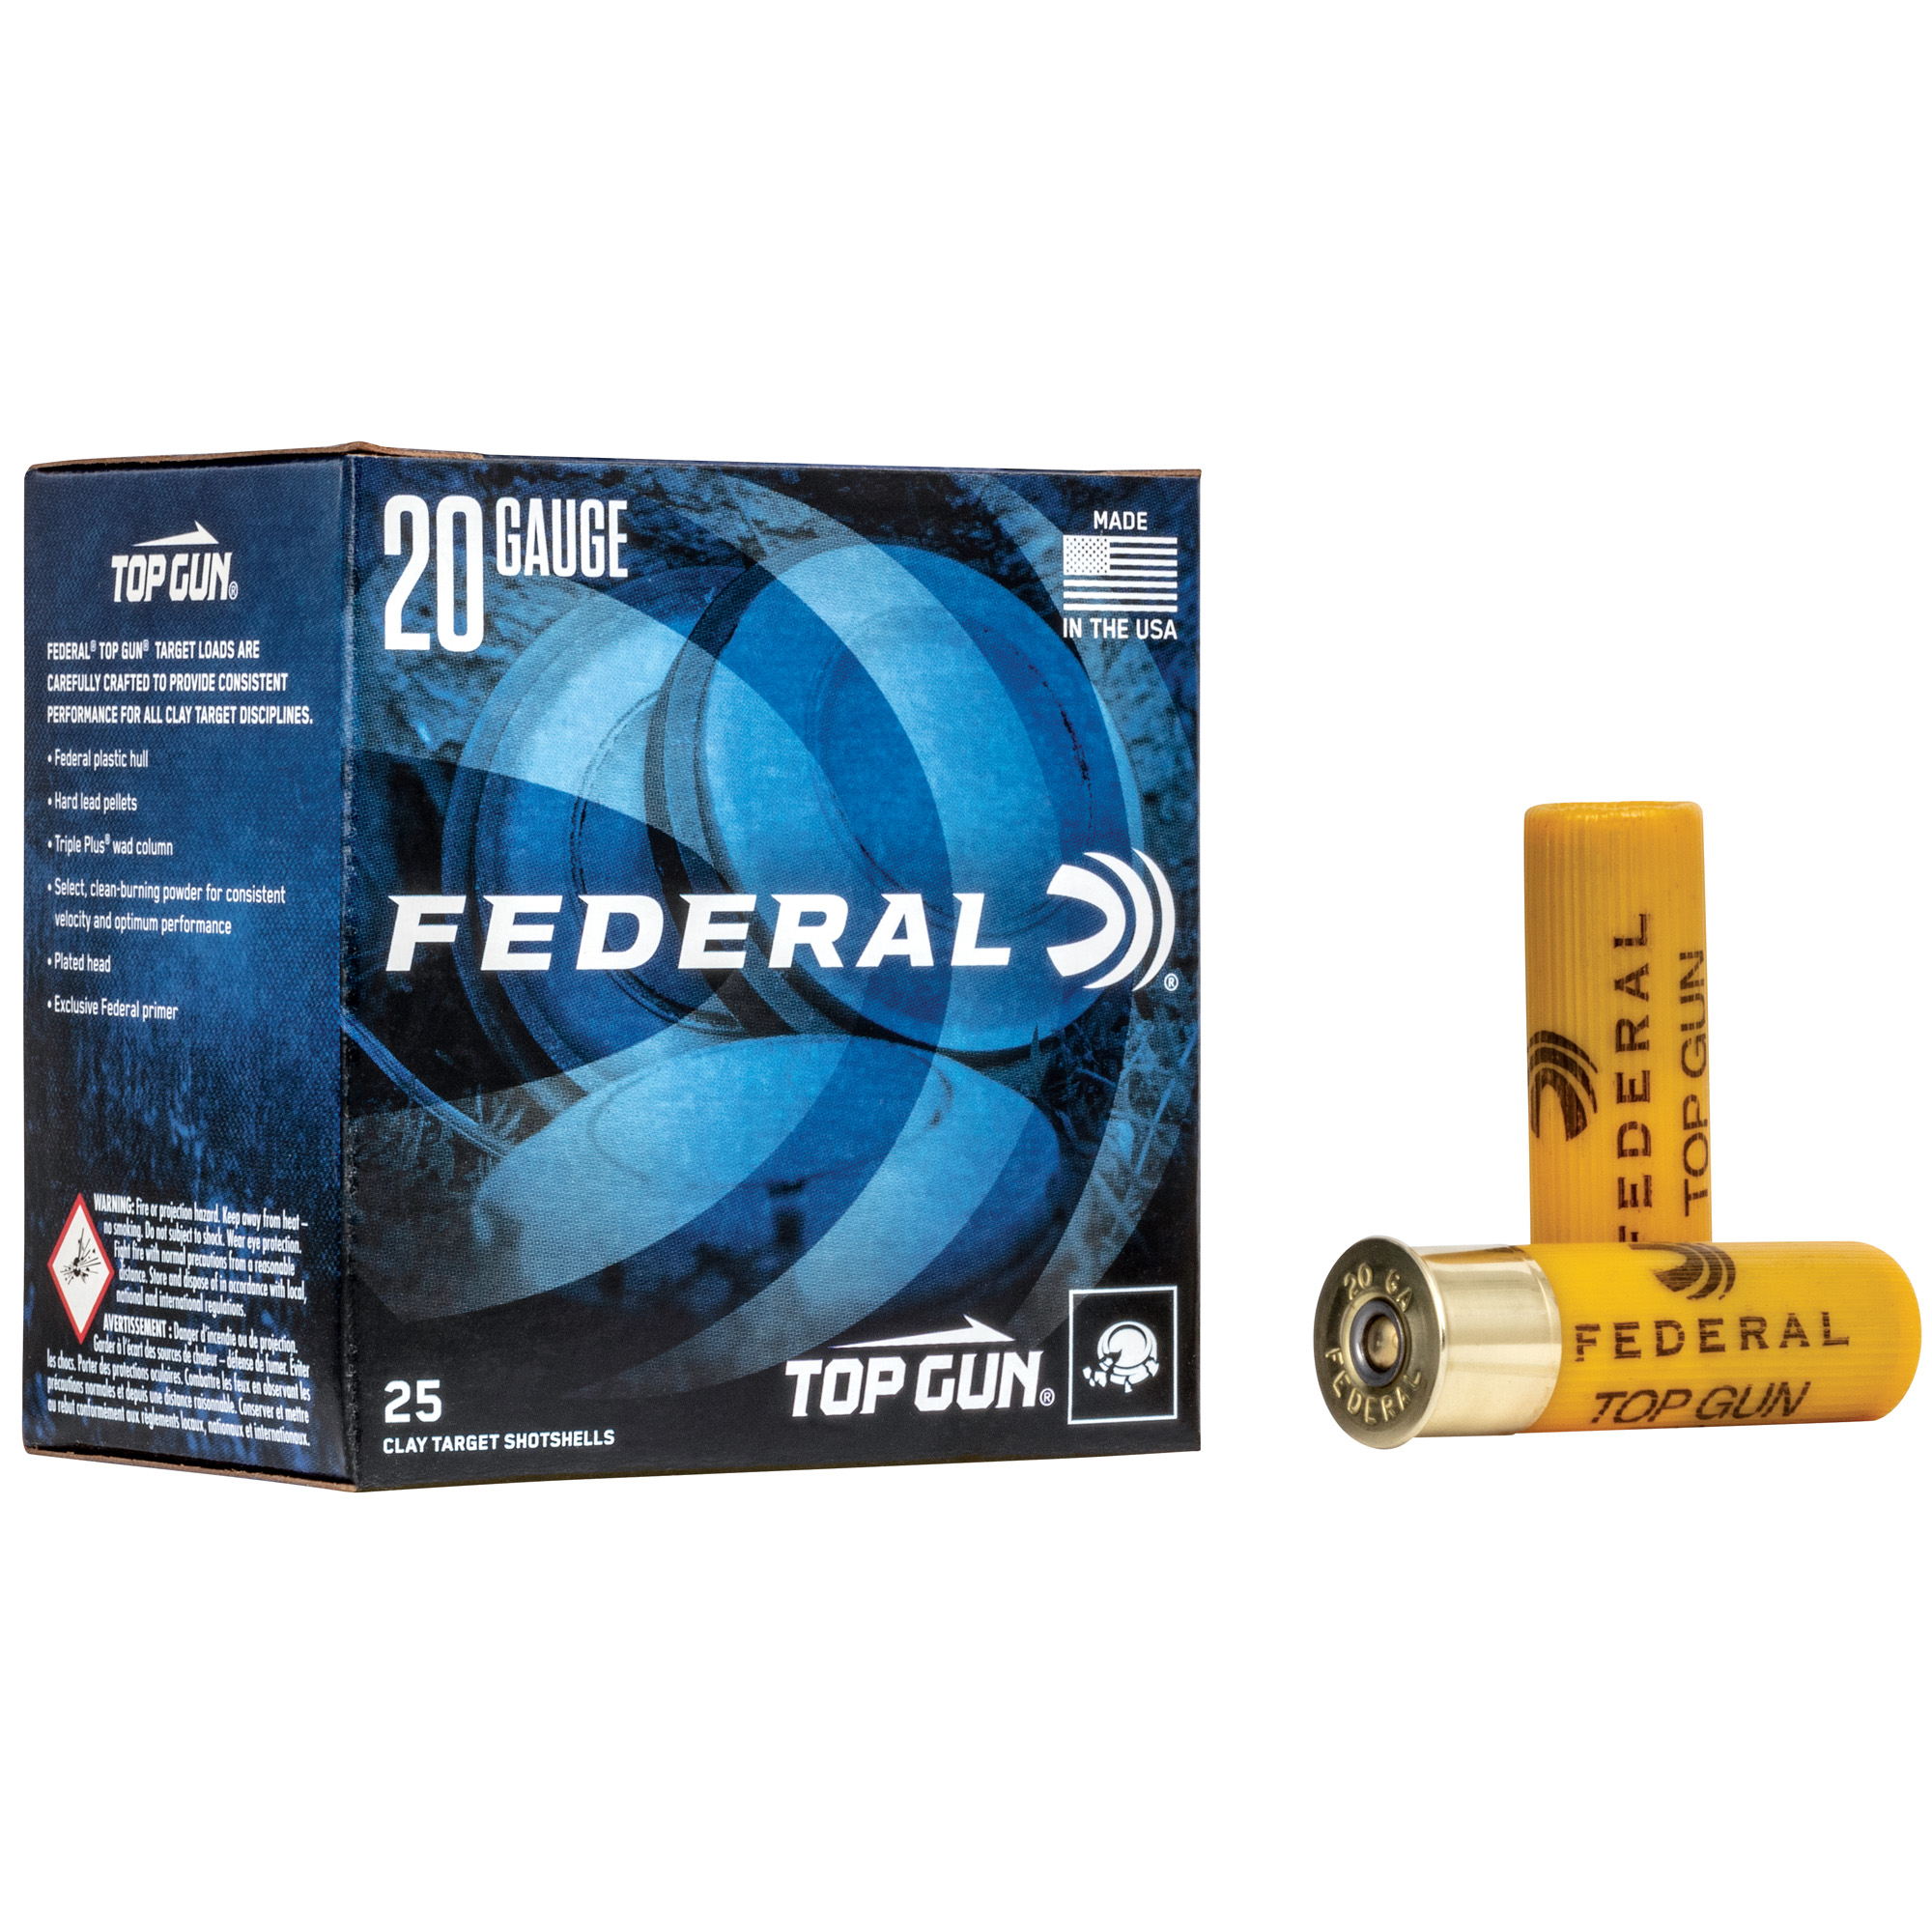 Federal TG2075 Top Gun 20 Gauge 2.75